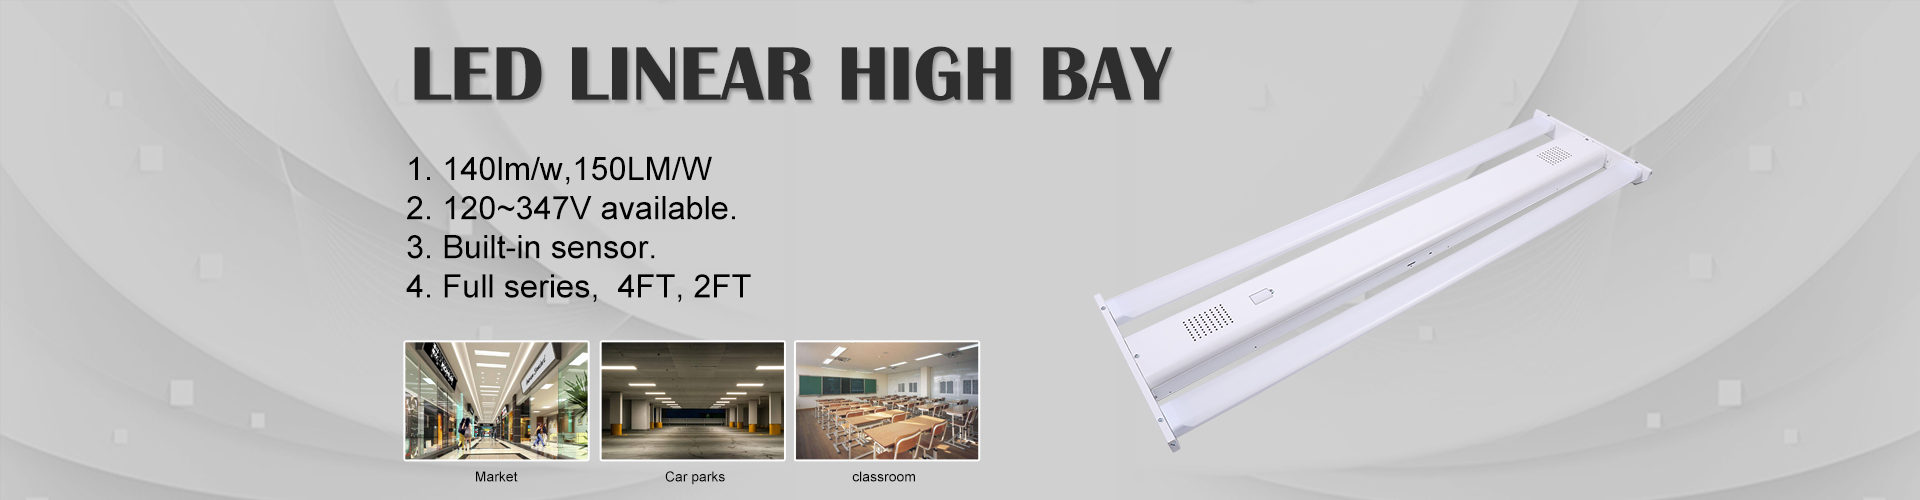 LED linear high bay